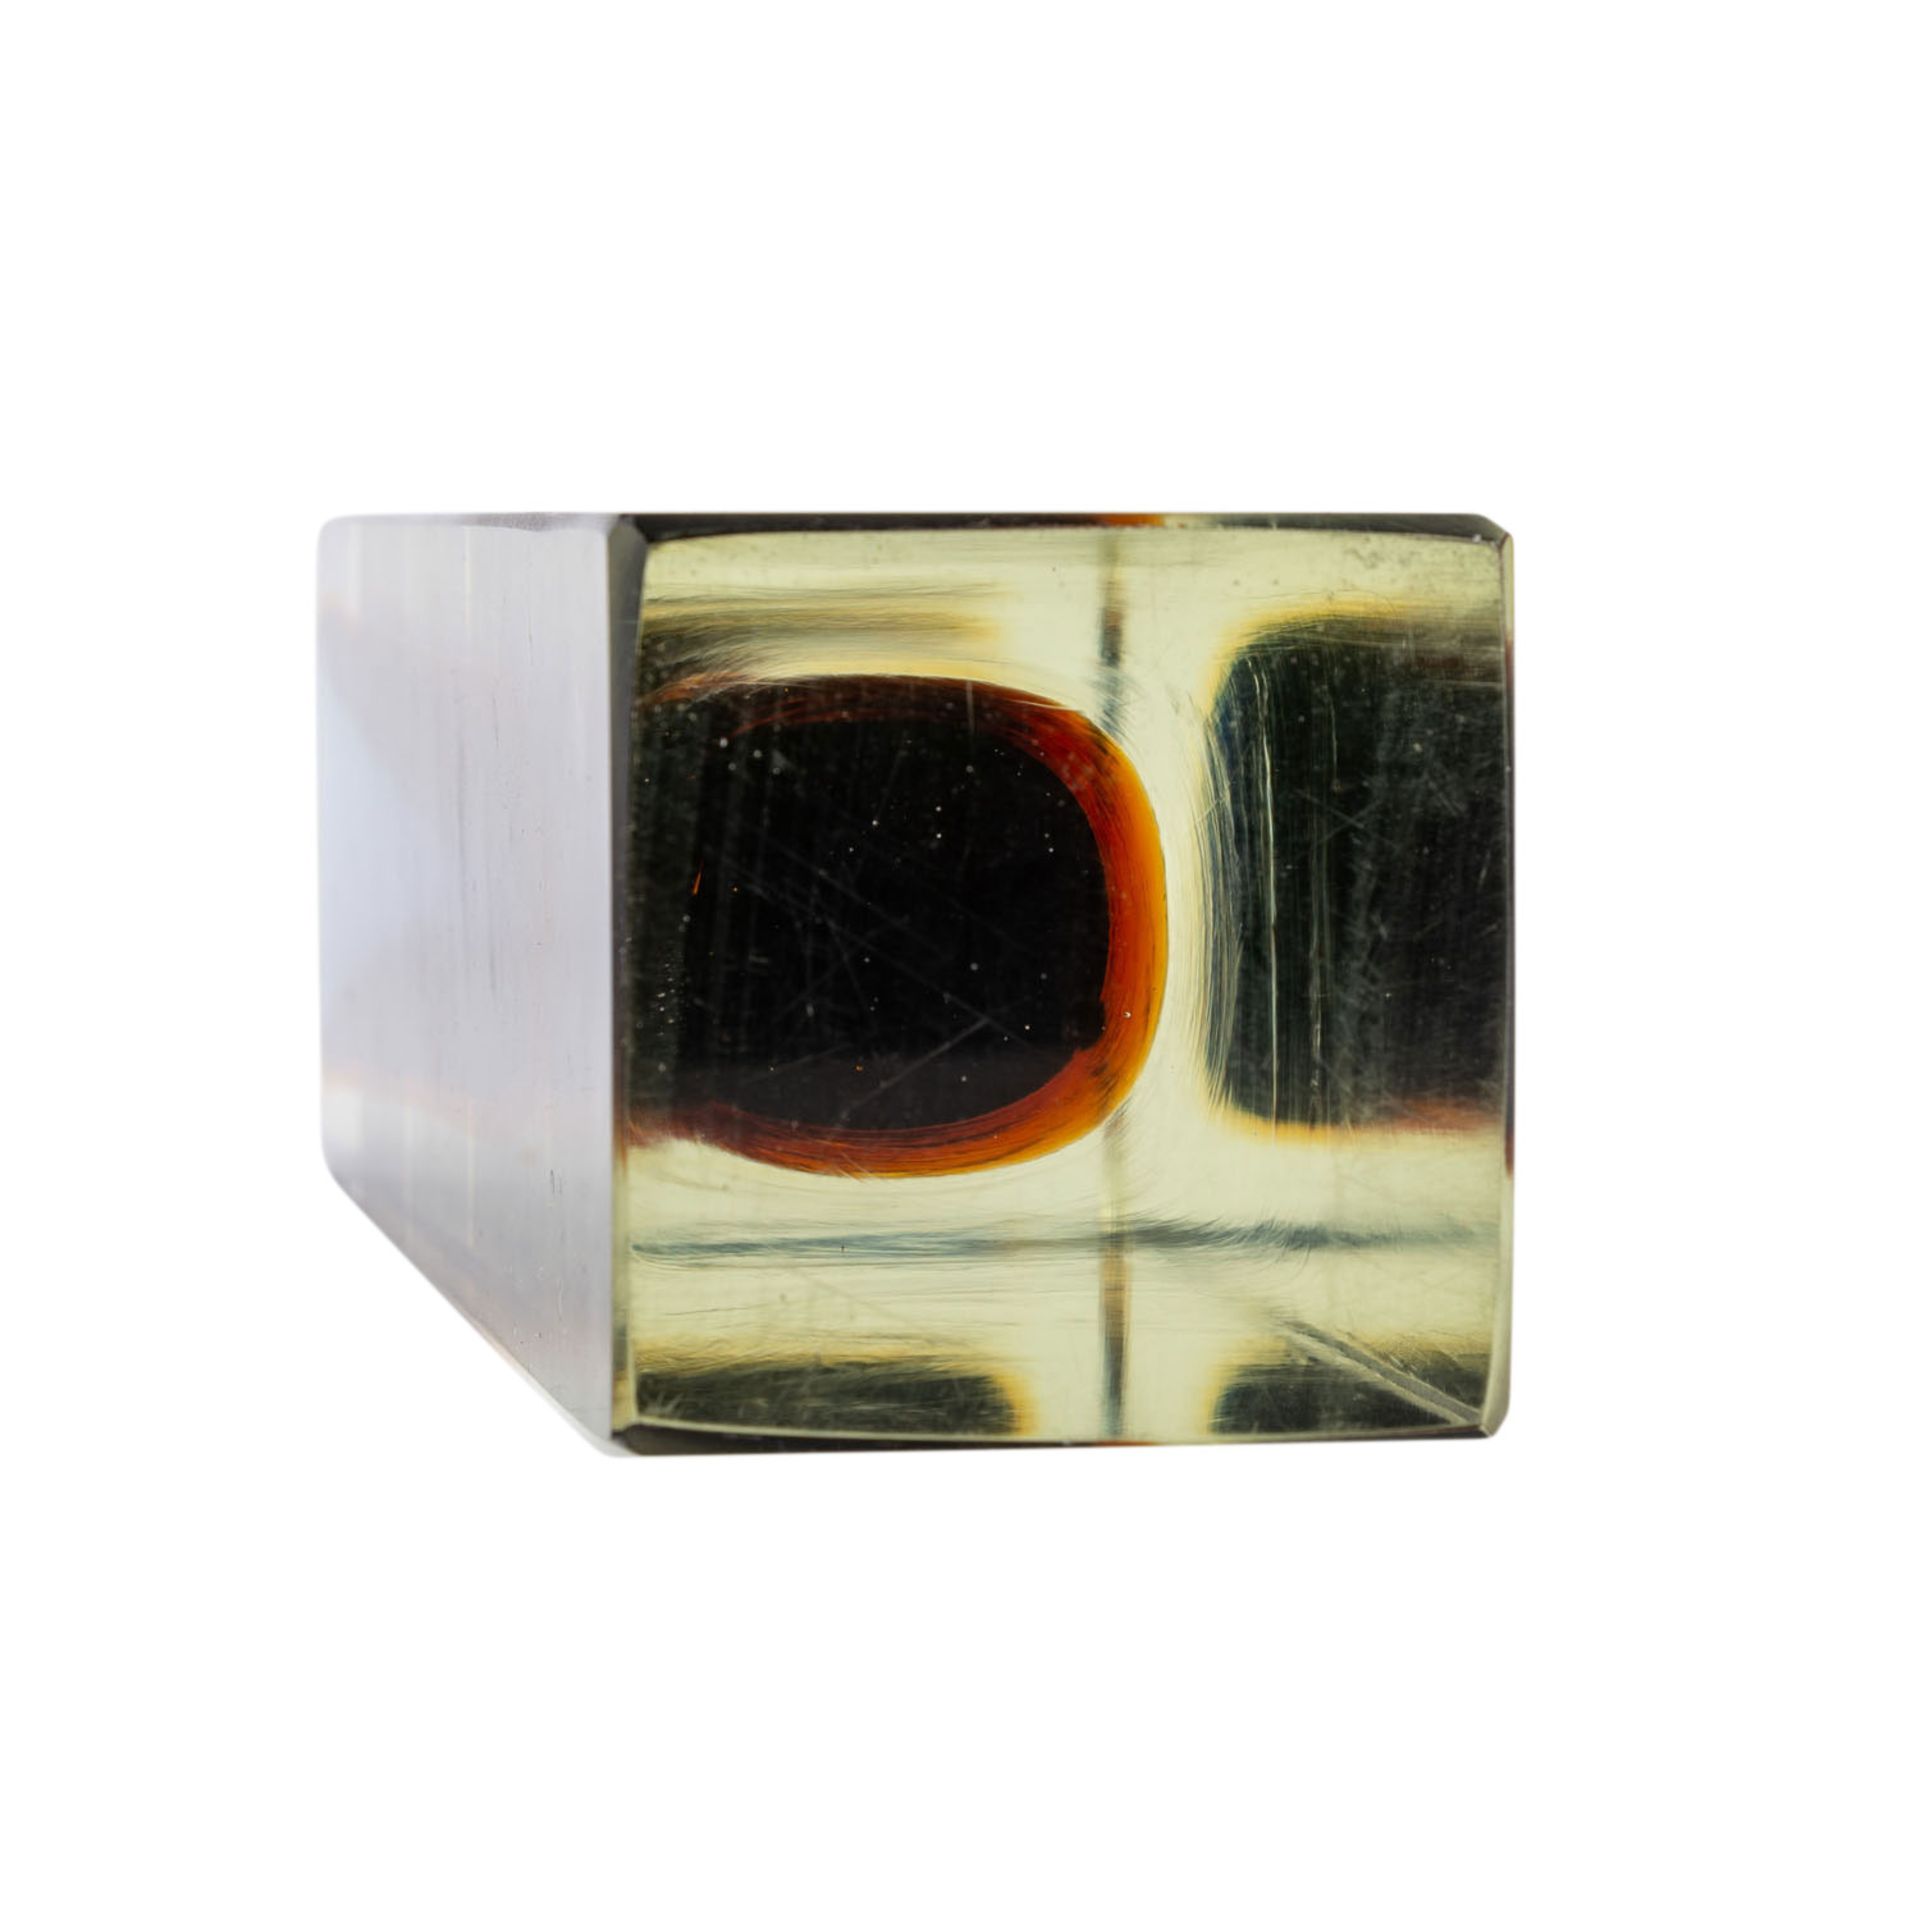 MURANO Blockvase 'Sommerso', 20. Jhd.Kristallglas mit 2 Farben, Klebeetikett 'ARTISTIC CRISTAL - Image 5 of 5